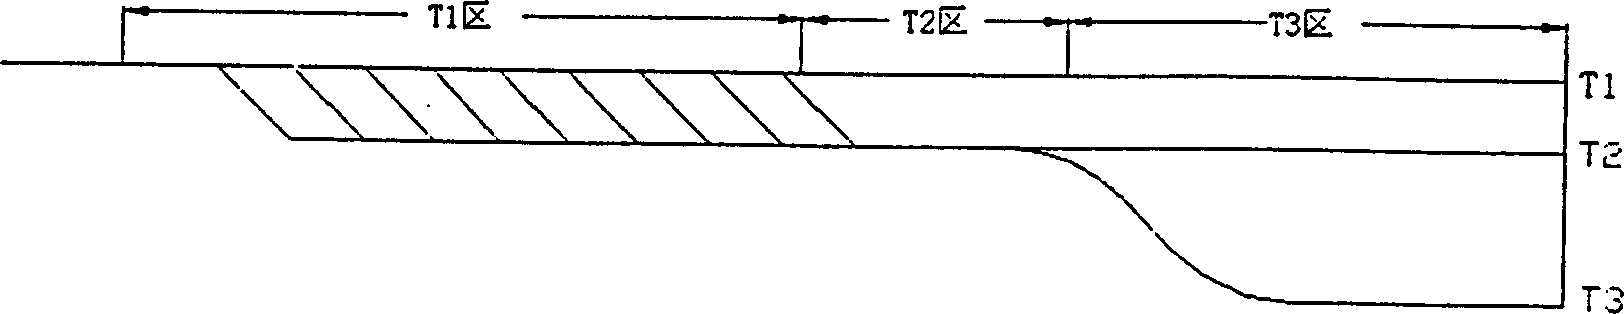 Method for growth of gallium arsenide monocrystal by gradient freeze method in horizontal three-temperature-zone furnace